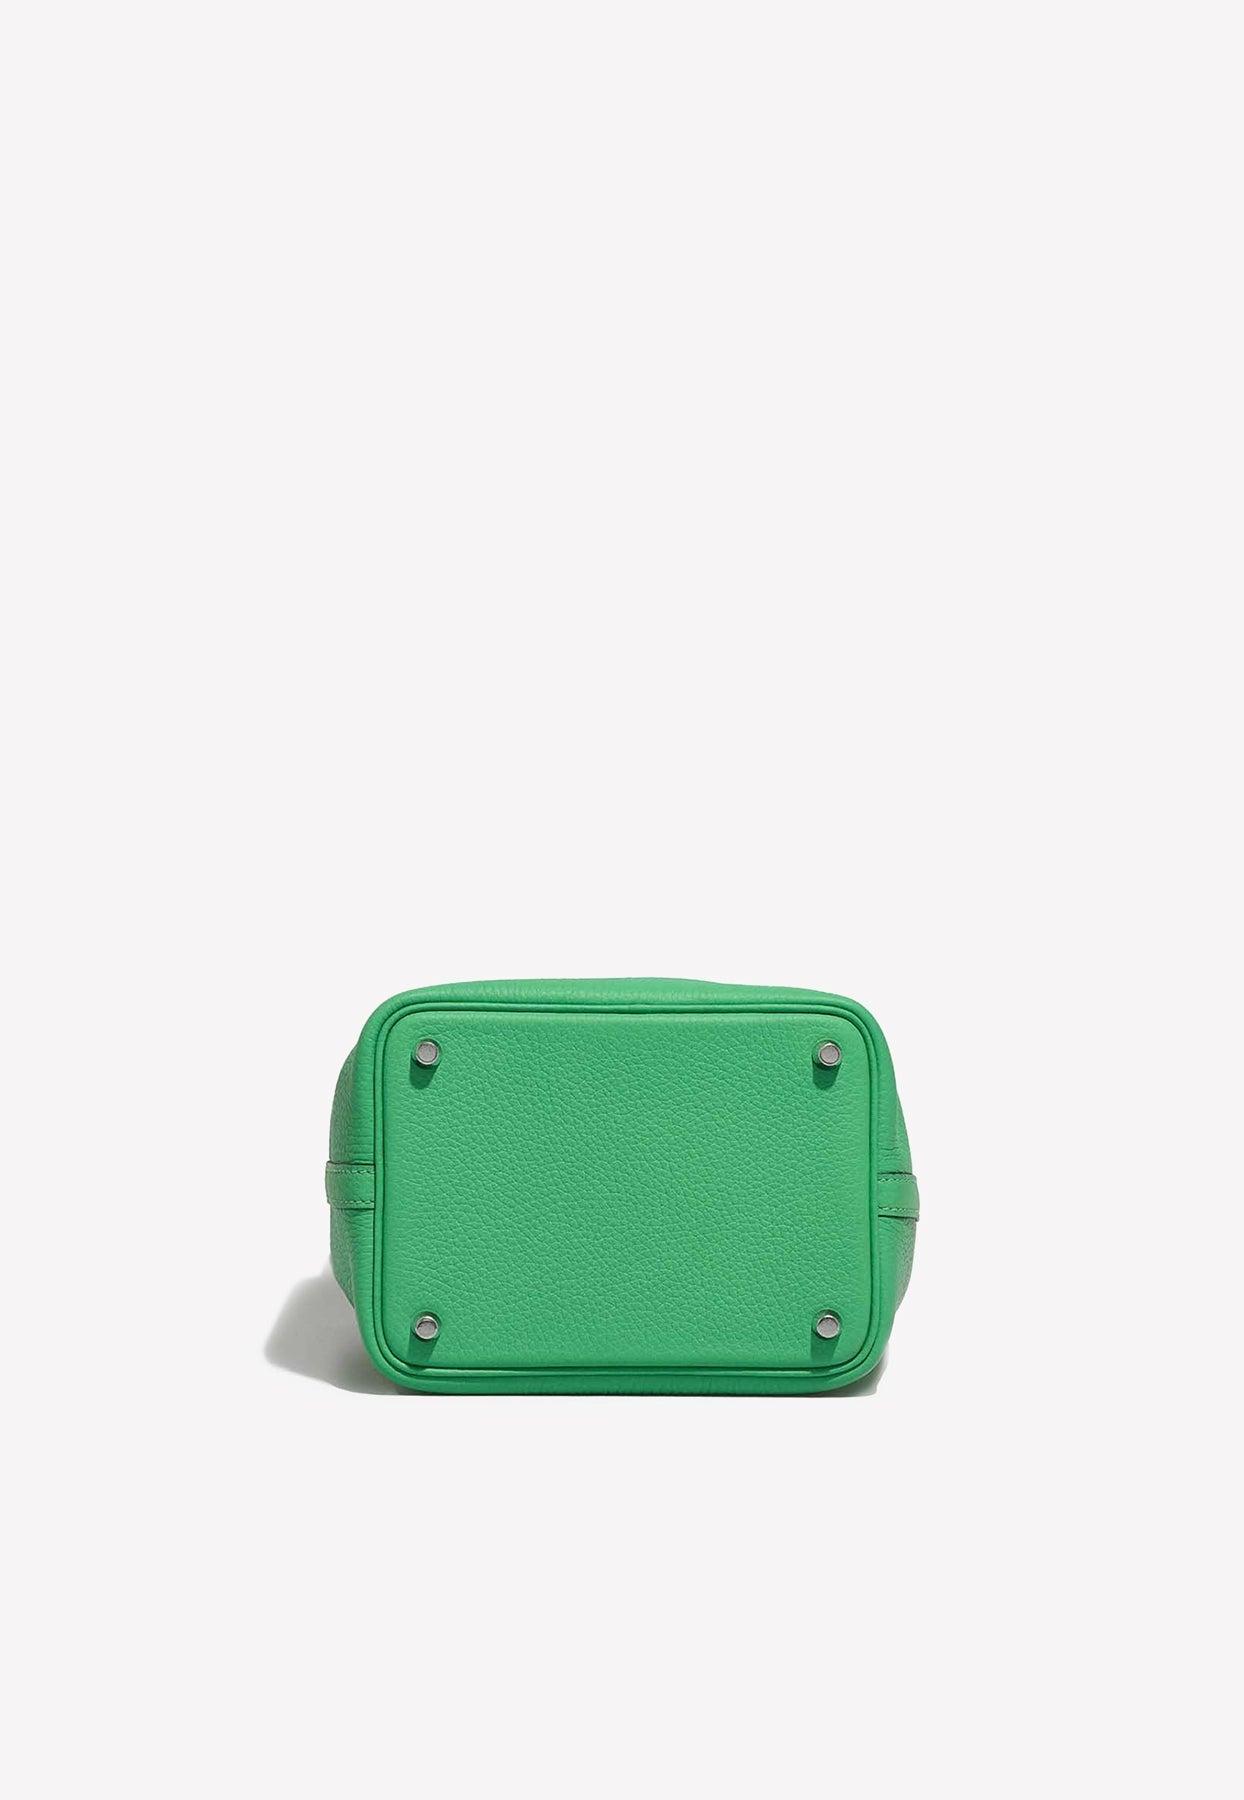 Hermes Picotin 18, Vert Jade Green, New in Box GA001